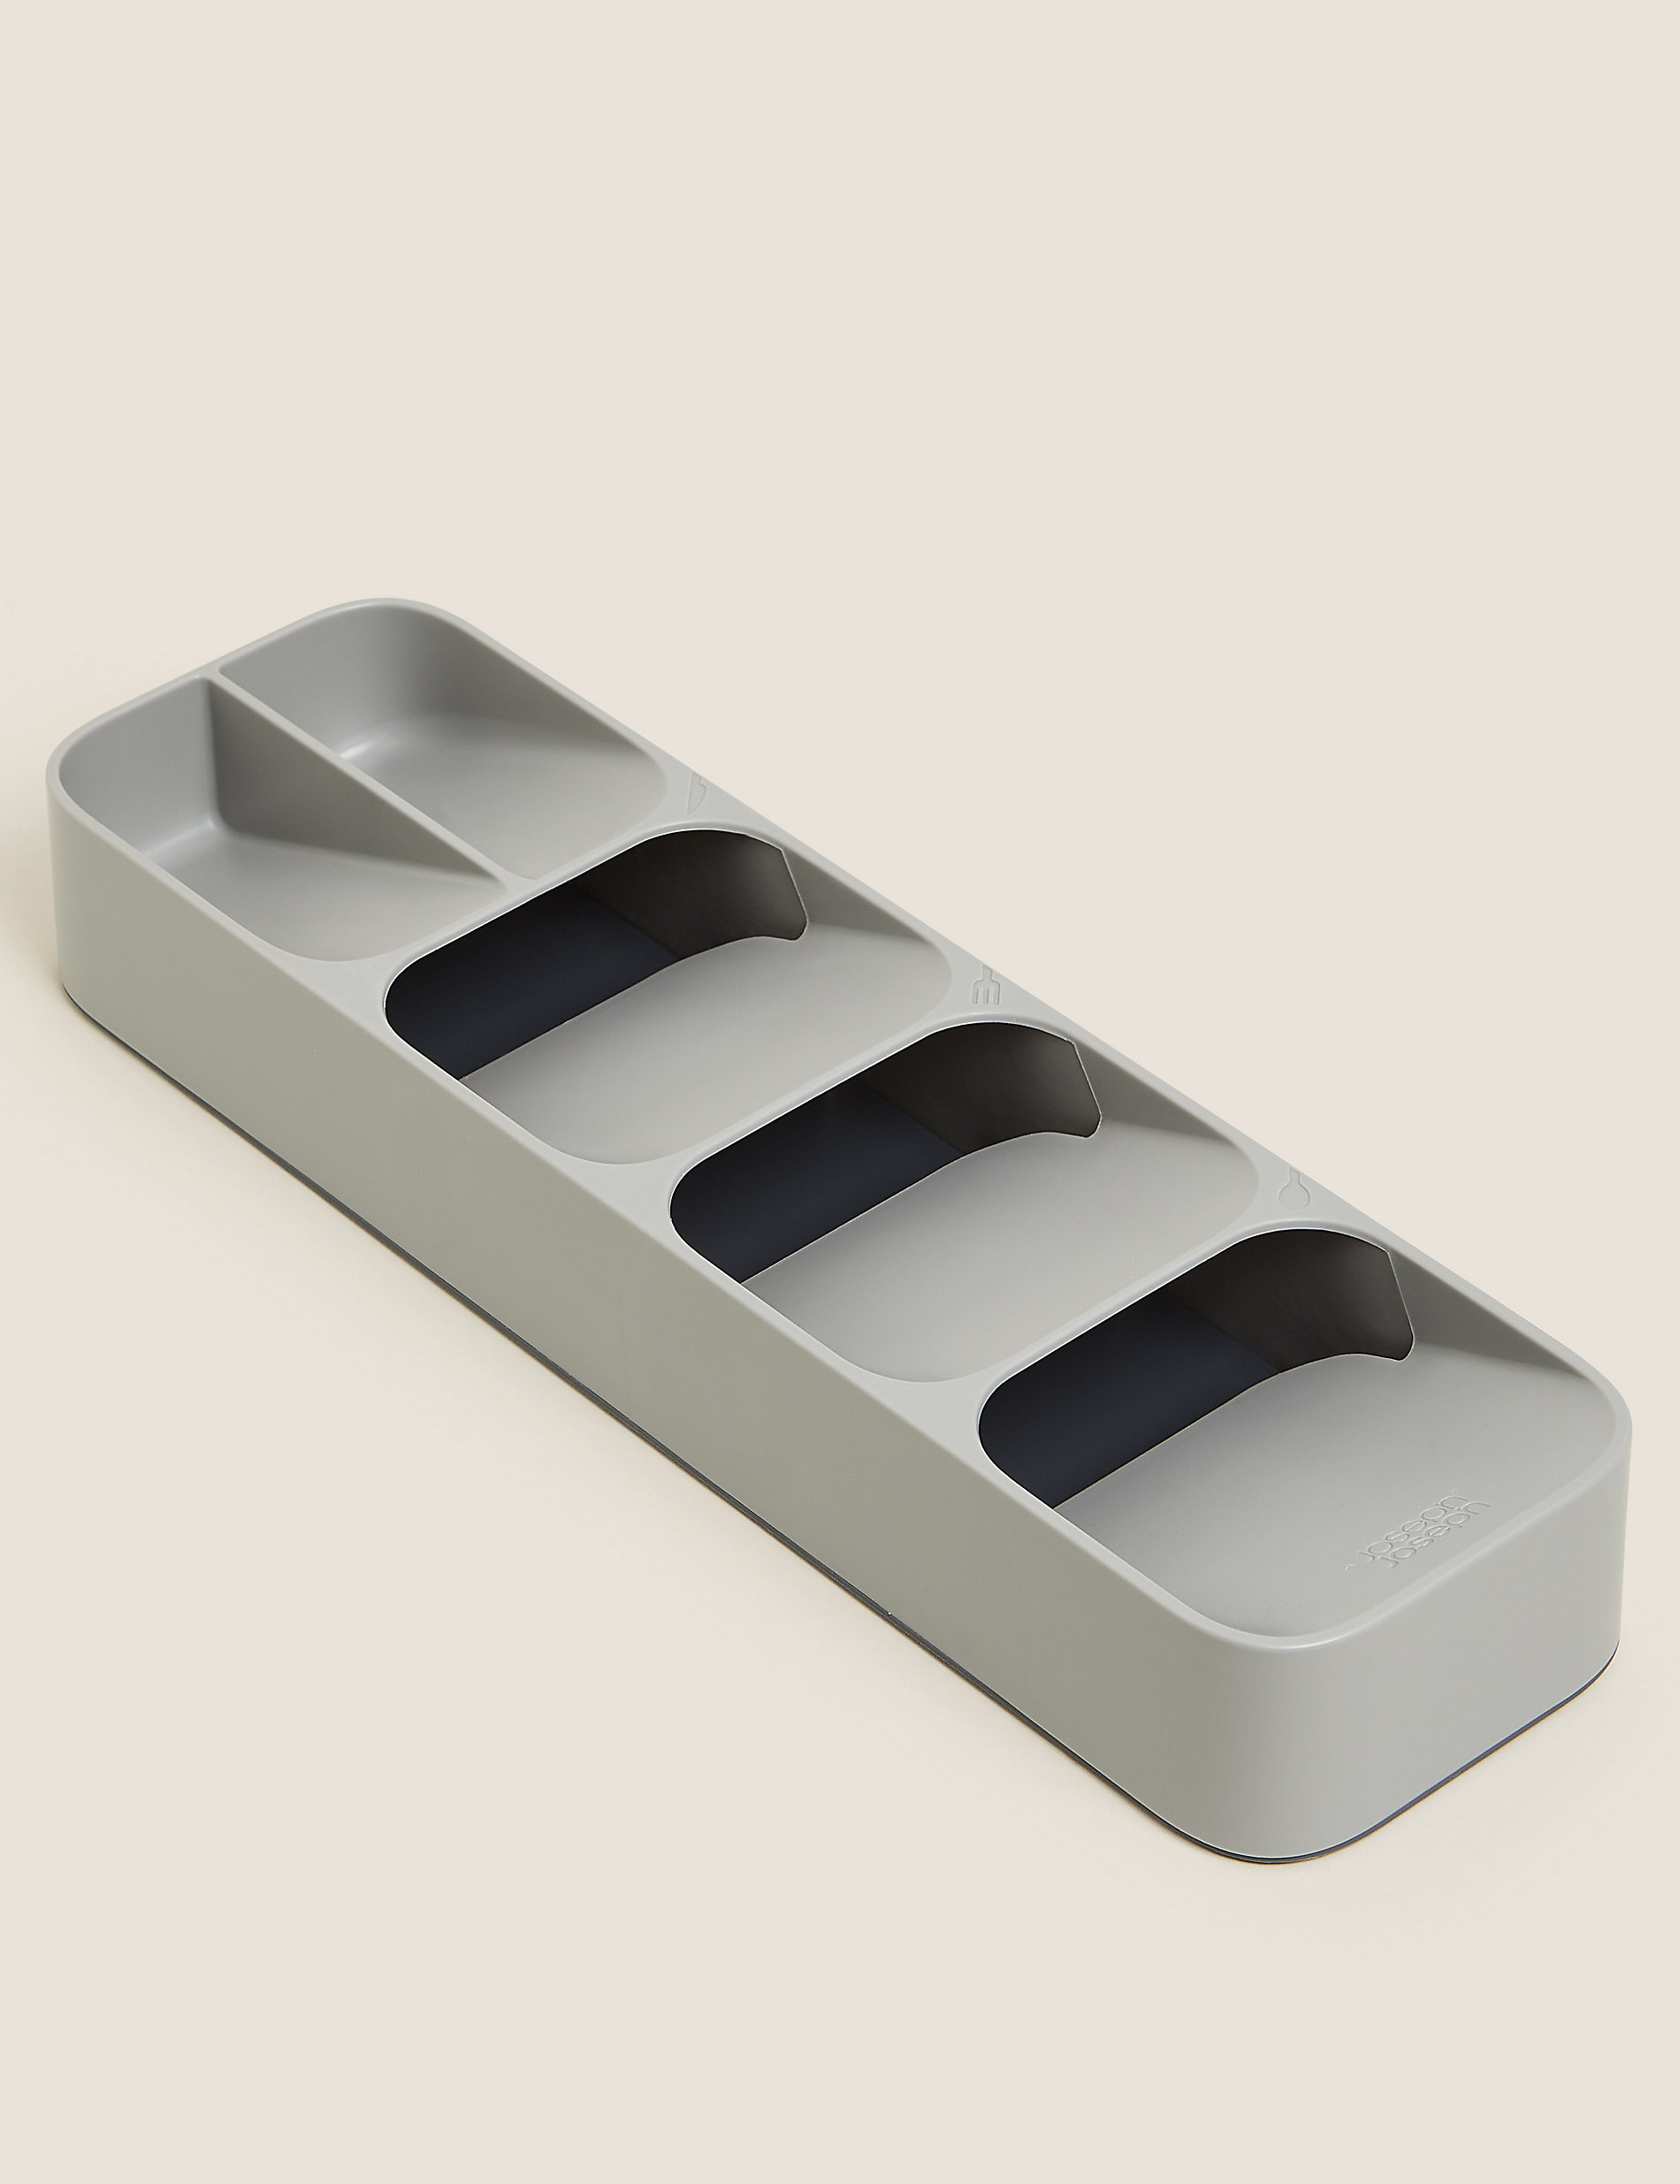 DrawerStore™ Compact Cutlery Organiser